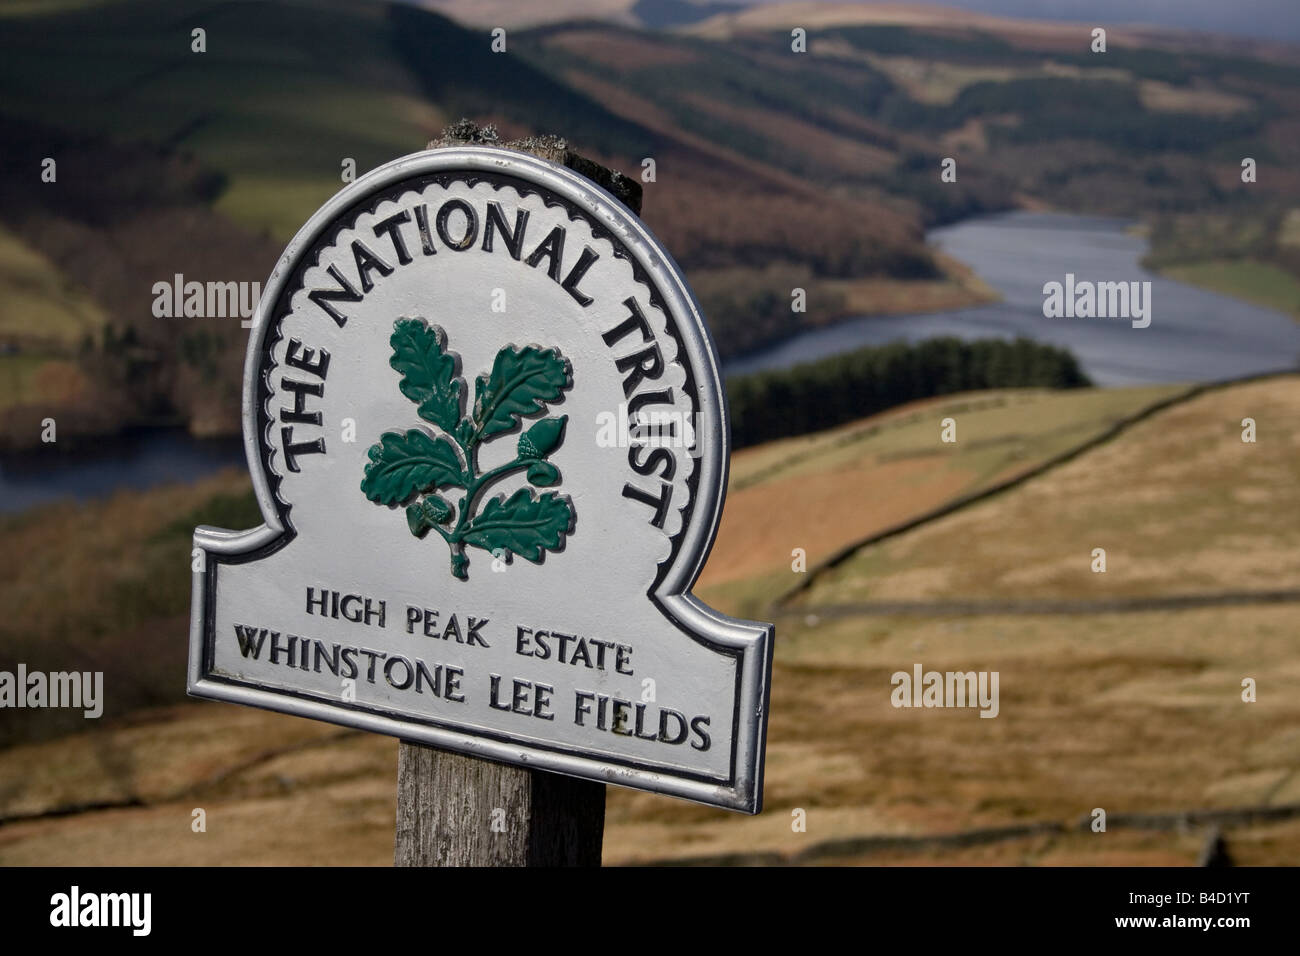 National Trust sign on High Peak Estate Whinstone Lee Fields Ladybower Peak District Derbyshire England Stock Photo